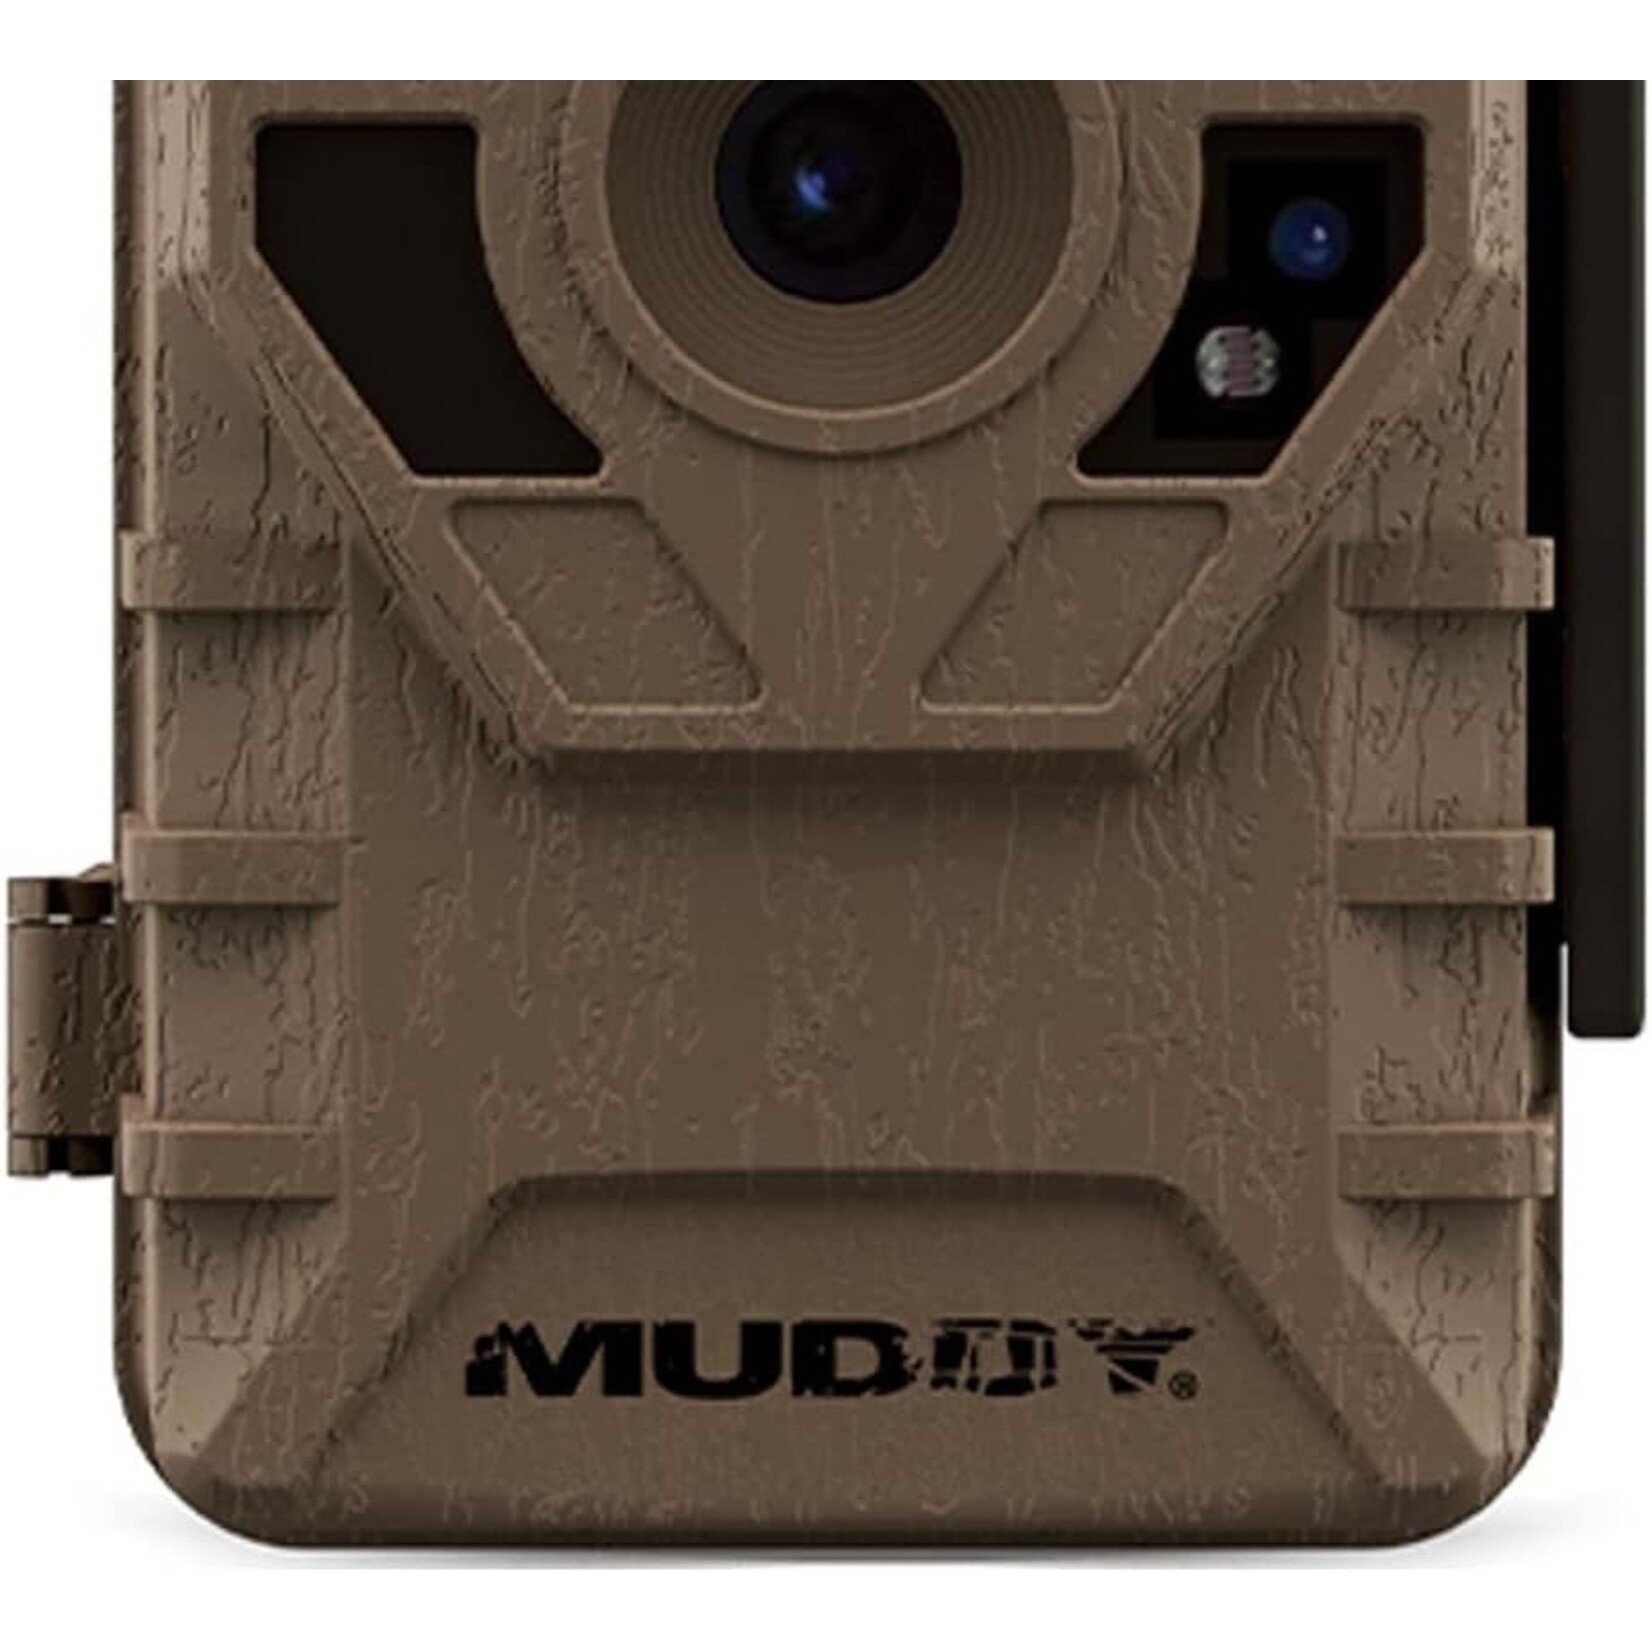 Muddy Manifest Cellular Camera - AT&T